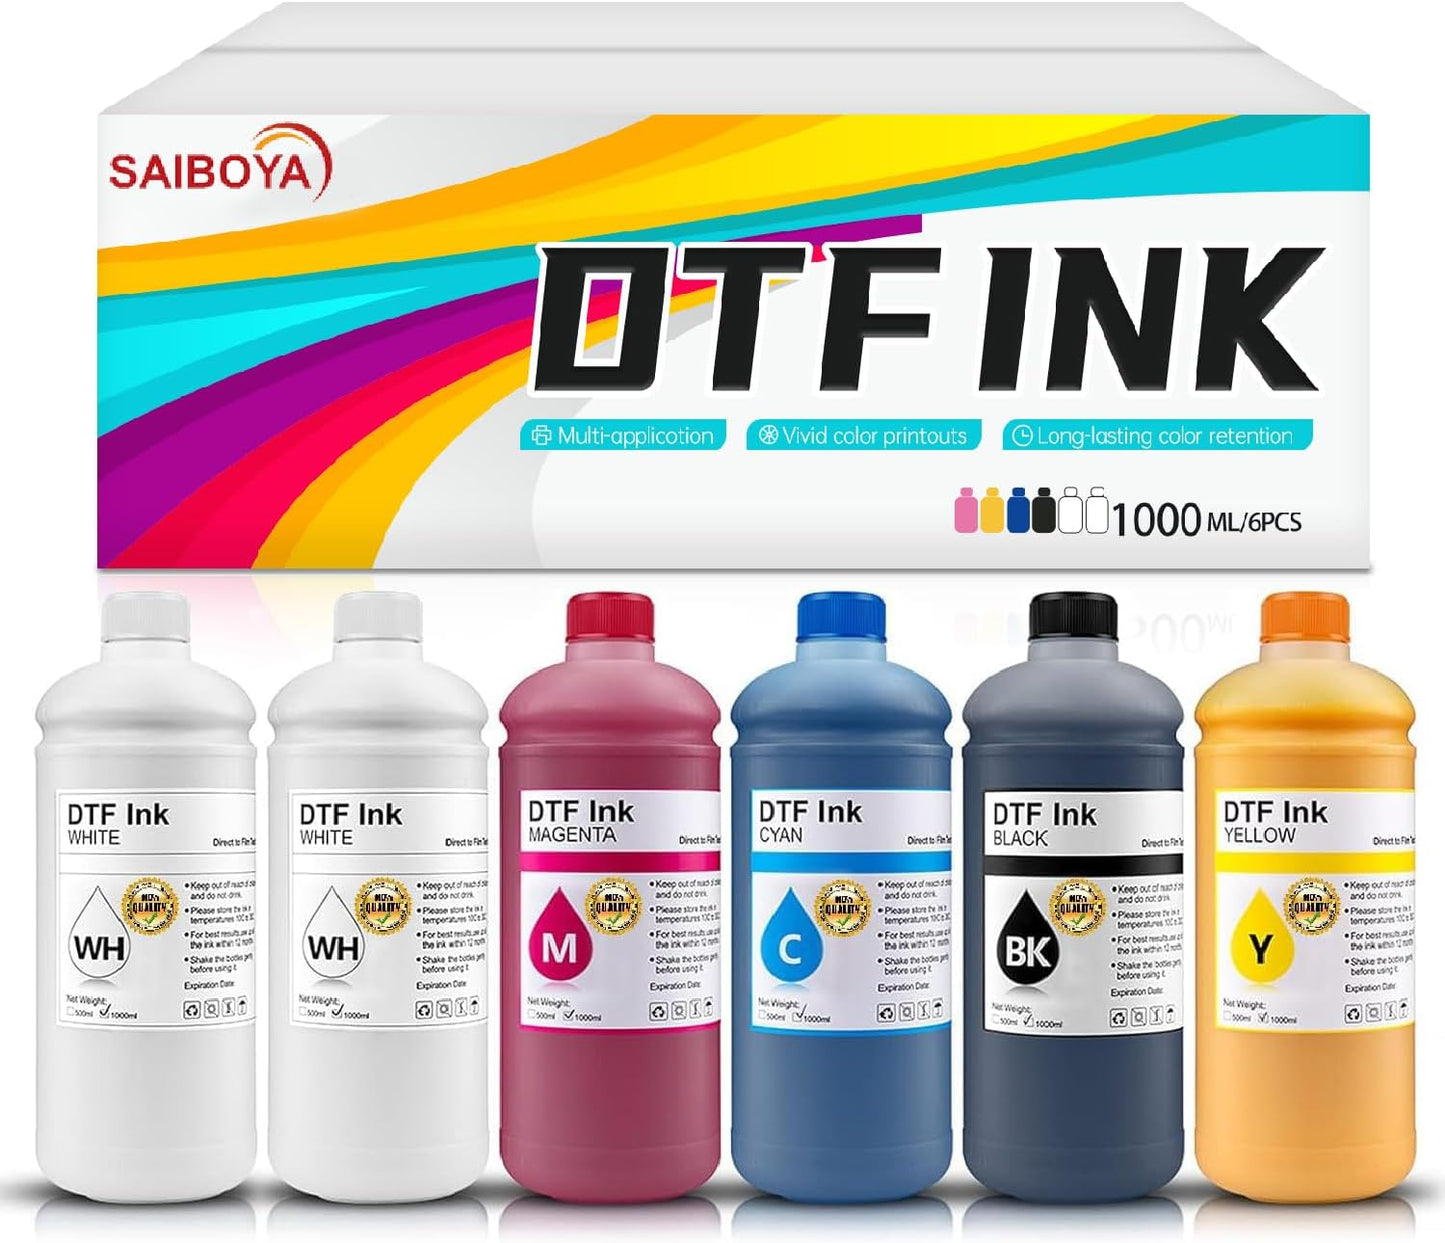 SAIBOYA DTF Ink 1000ml Combo Pack Compatible for ET printheads Installed DTF Printers L1800 R1390 ET-4800 8550 XP